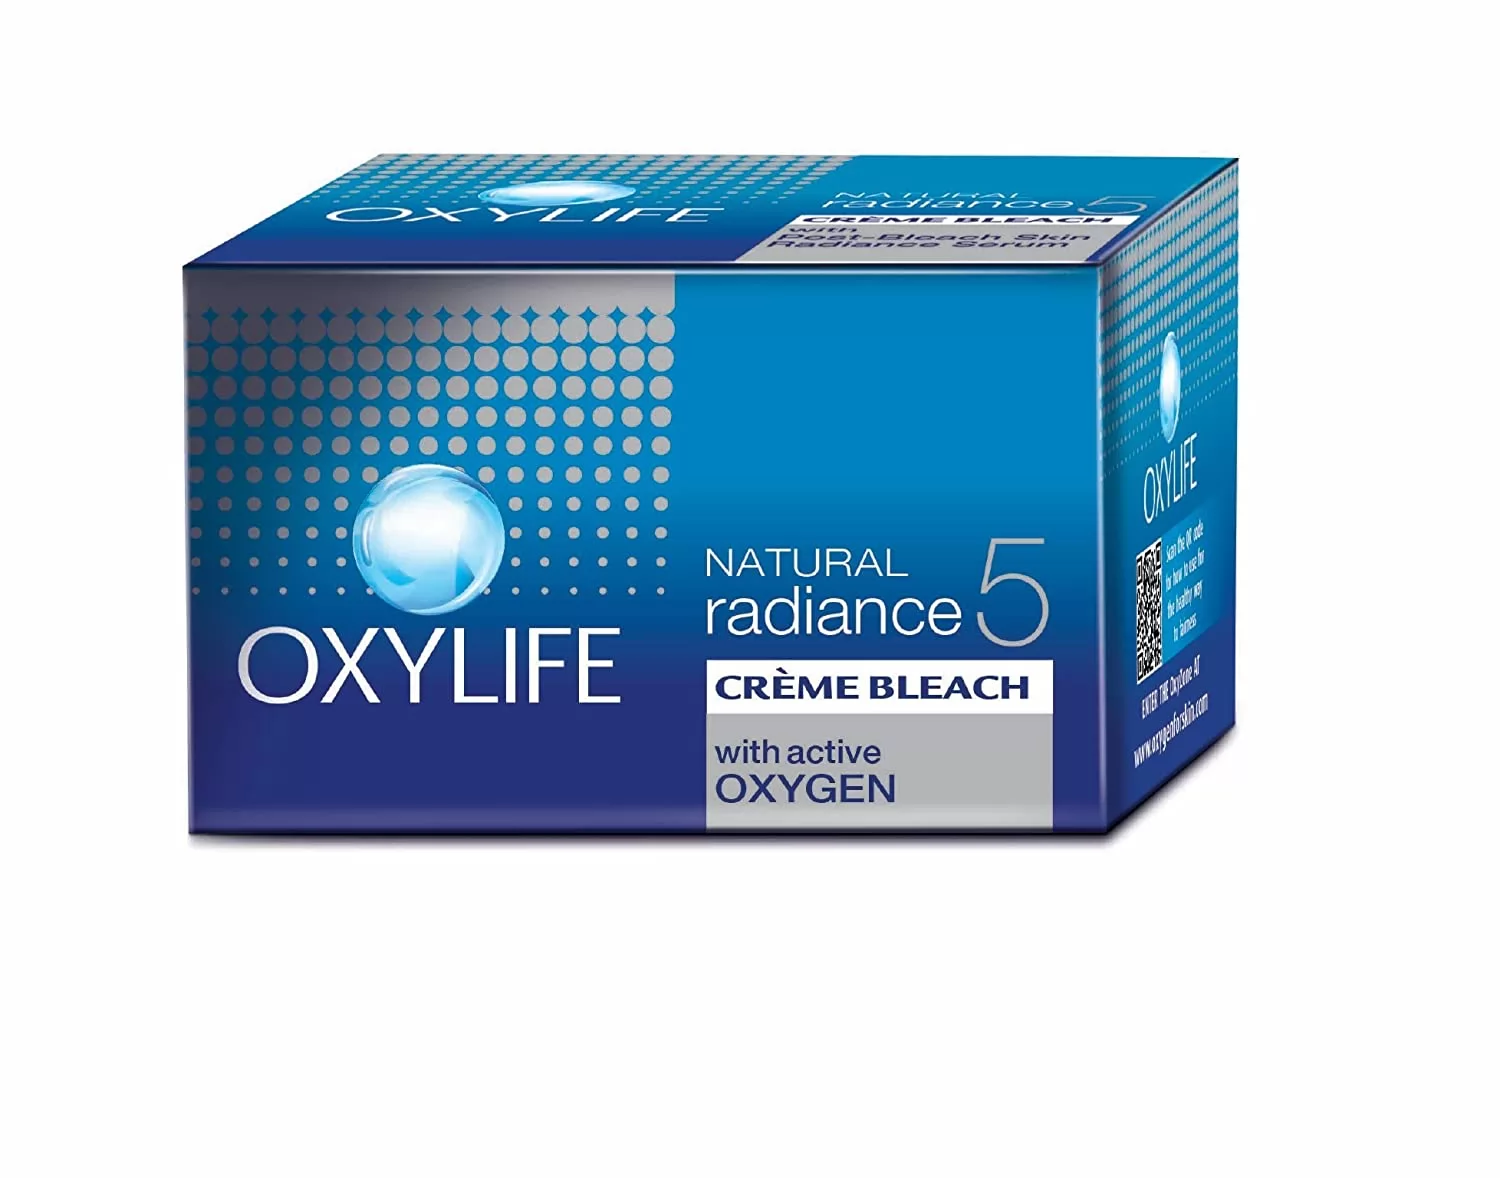 Oxylife Natural Radiance 5 Crème Bleach - with Active Oxygen (ऑक्सिलाइफ नेचुरल रेडियंस 5 क्रीम ब्लीच - विद एक्टिव ऑक्सीजन)